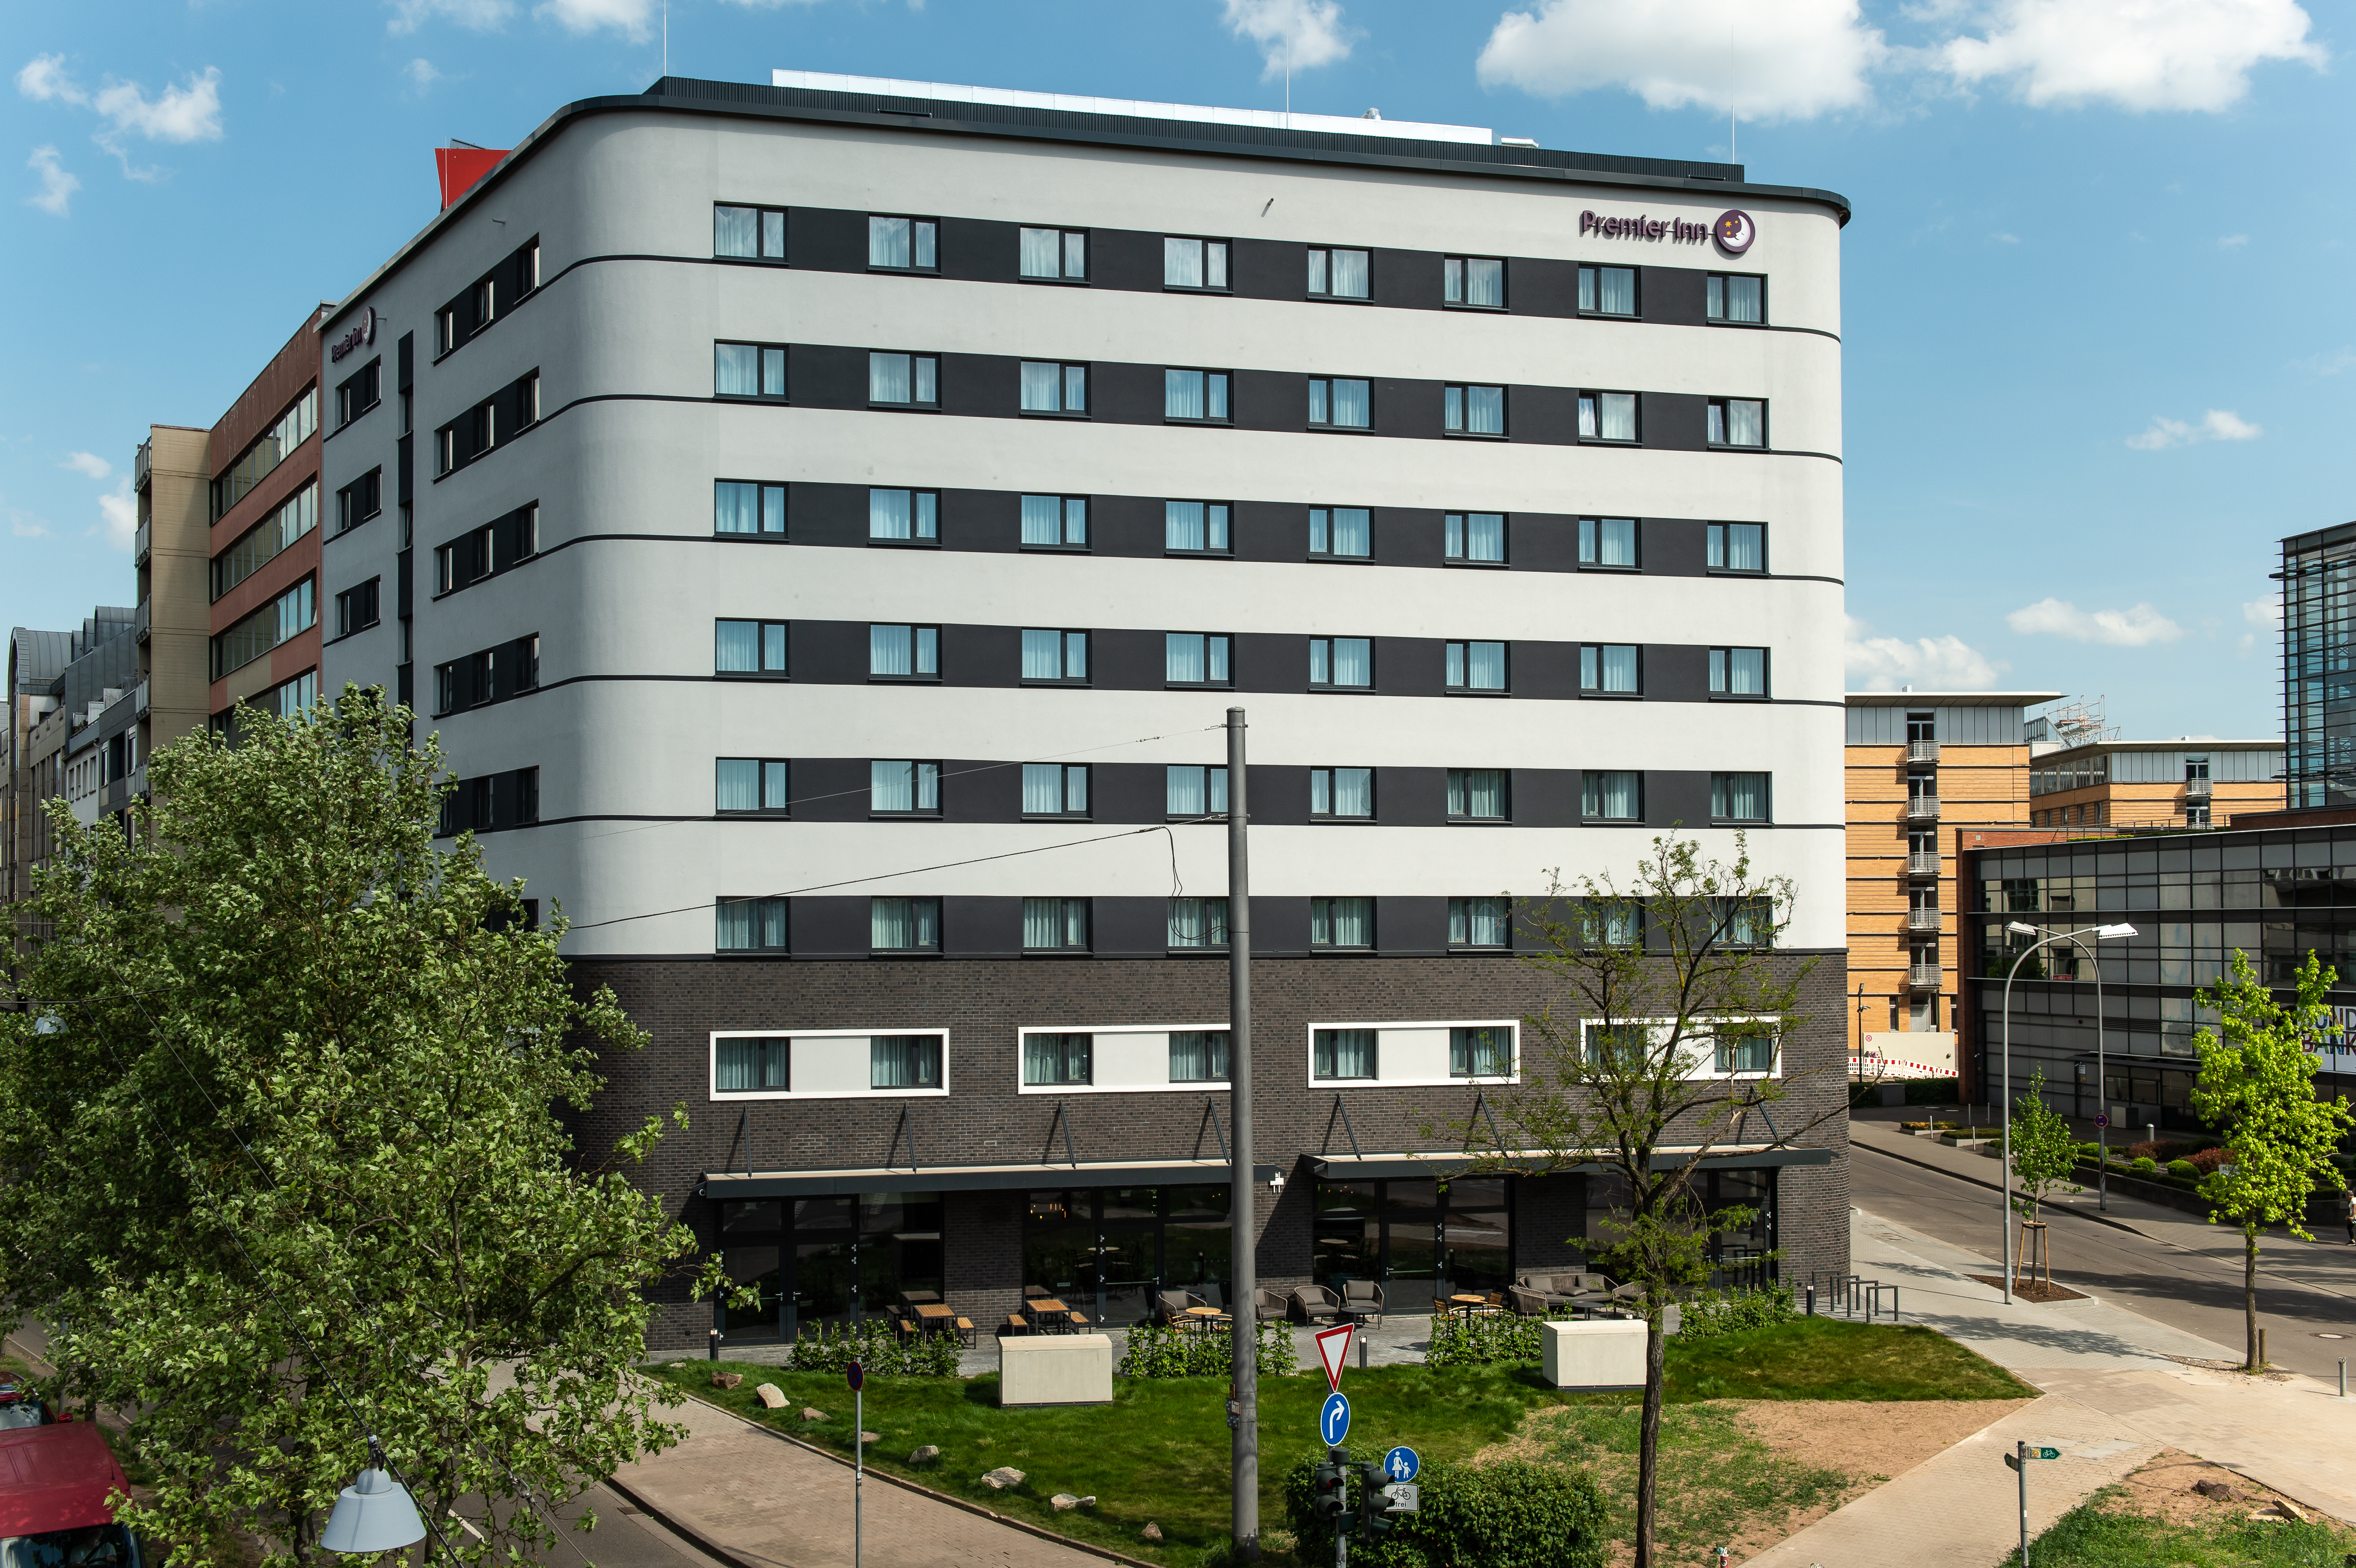 Premier Inn Hotel in Saarbrücken